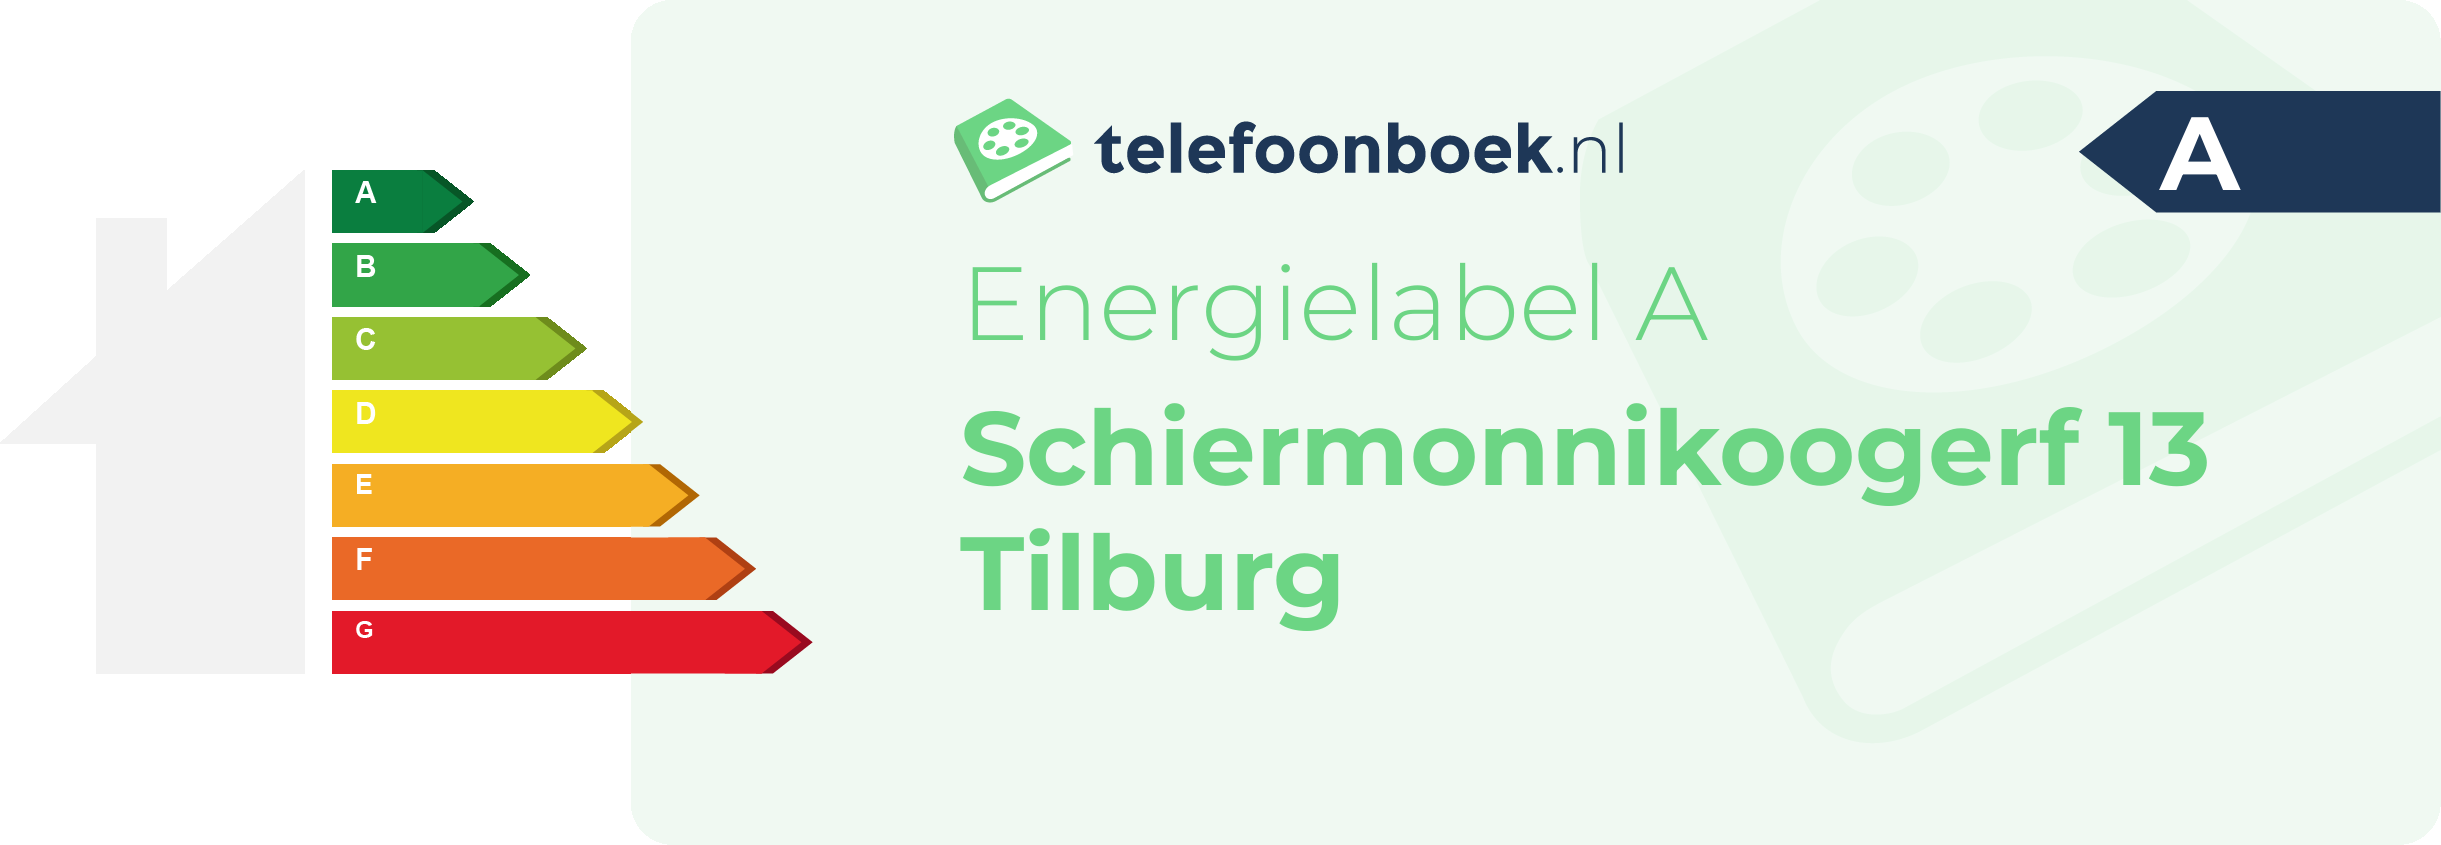 Energielabel Schiermonnikoogerf 13 Tilburg